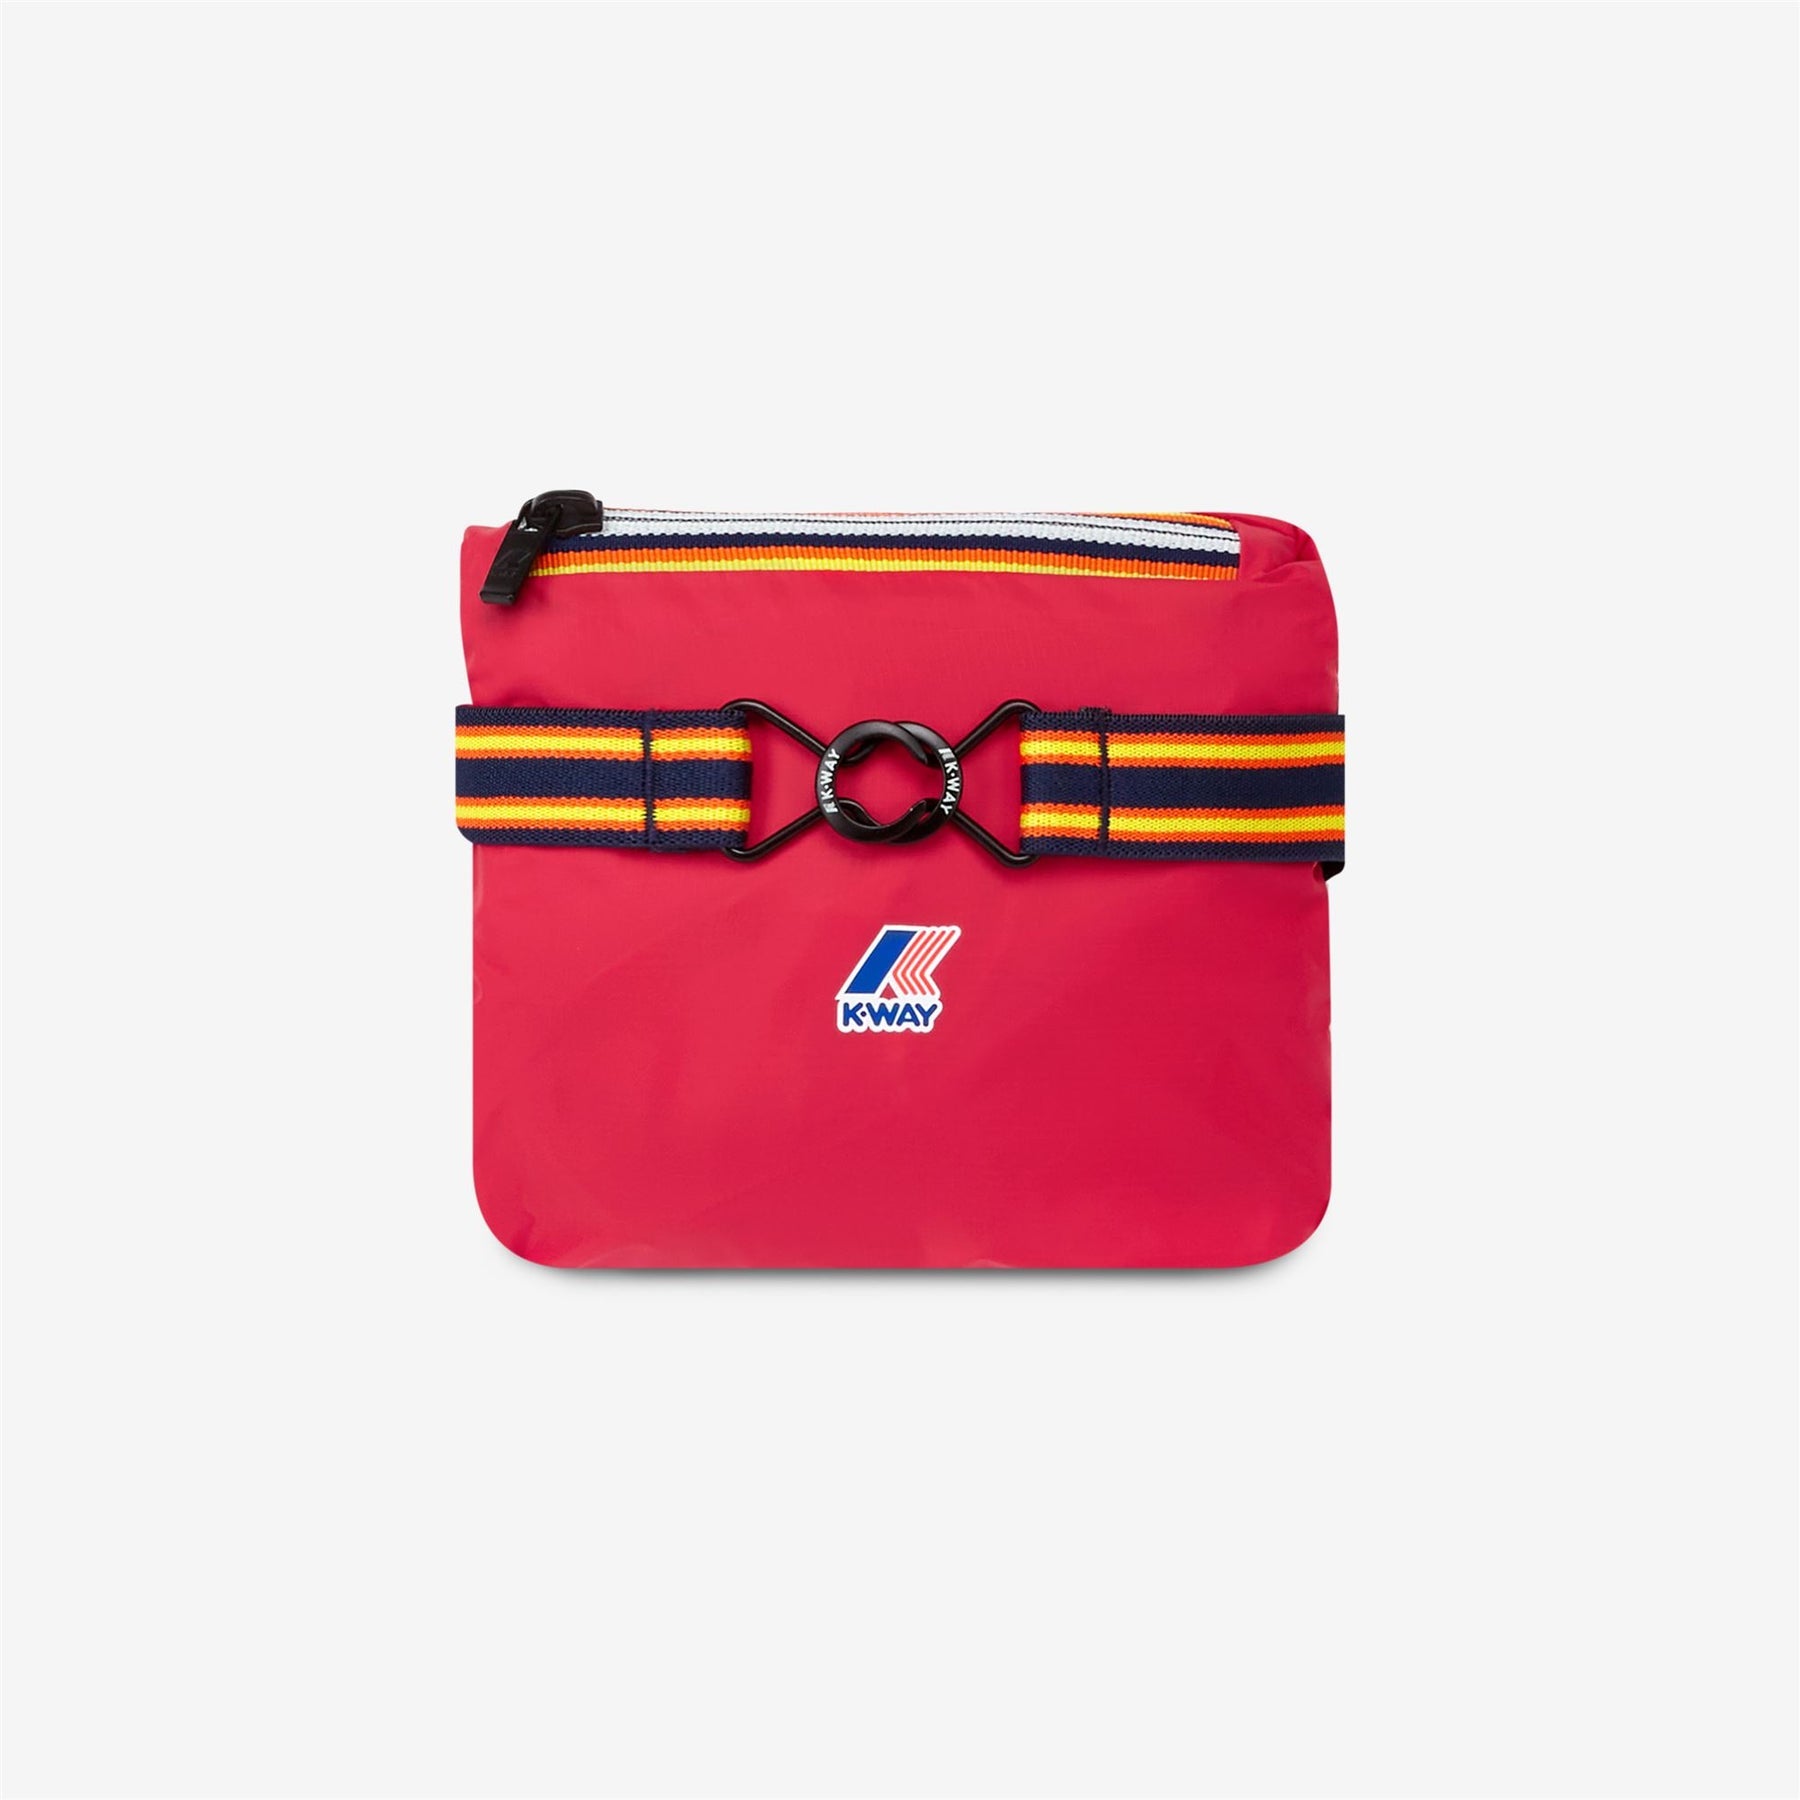 Claude - Kids Packable Full Zip Waterproof Rain Jacket in Red Berry